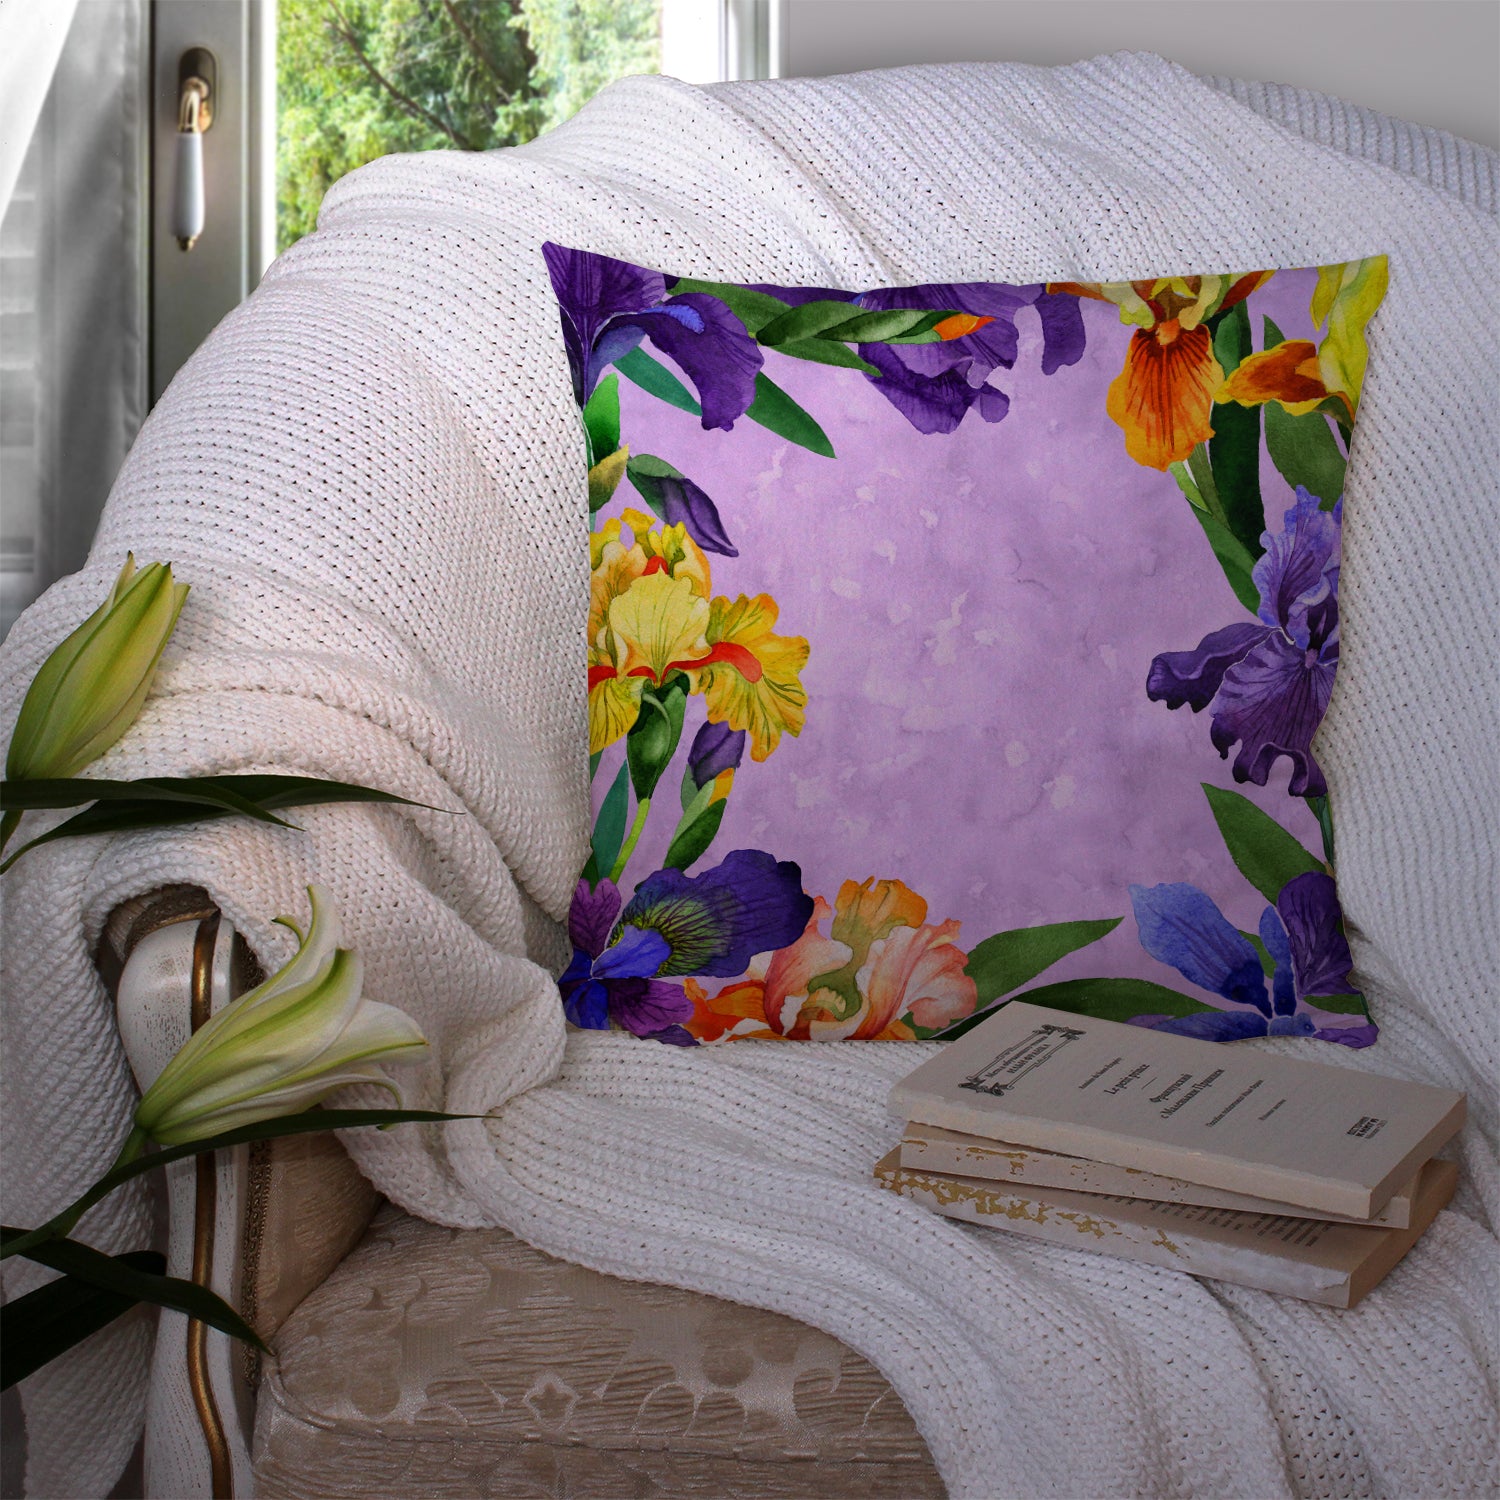 Irises Fabric Decorative Pillow CK1697PW1414 - the-store.com